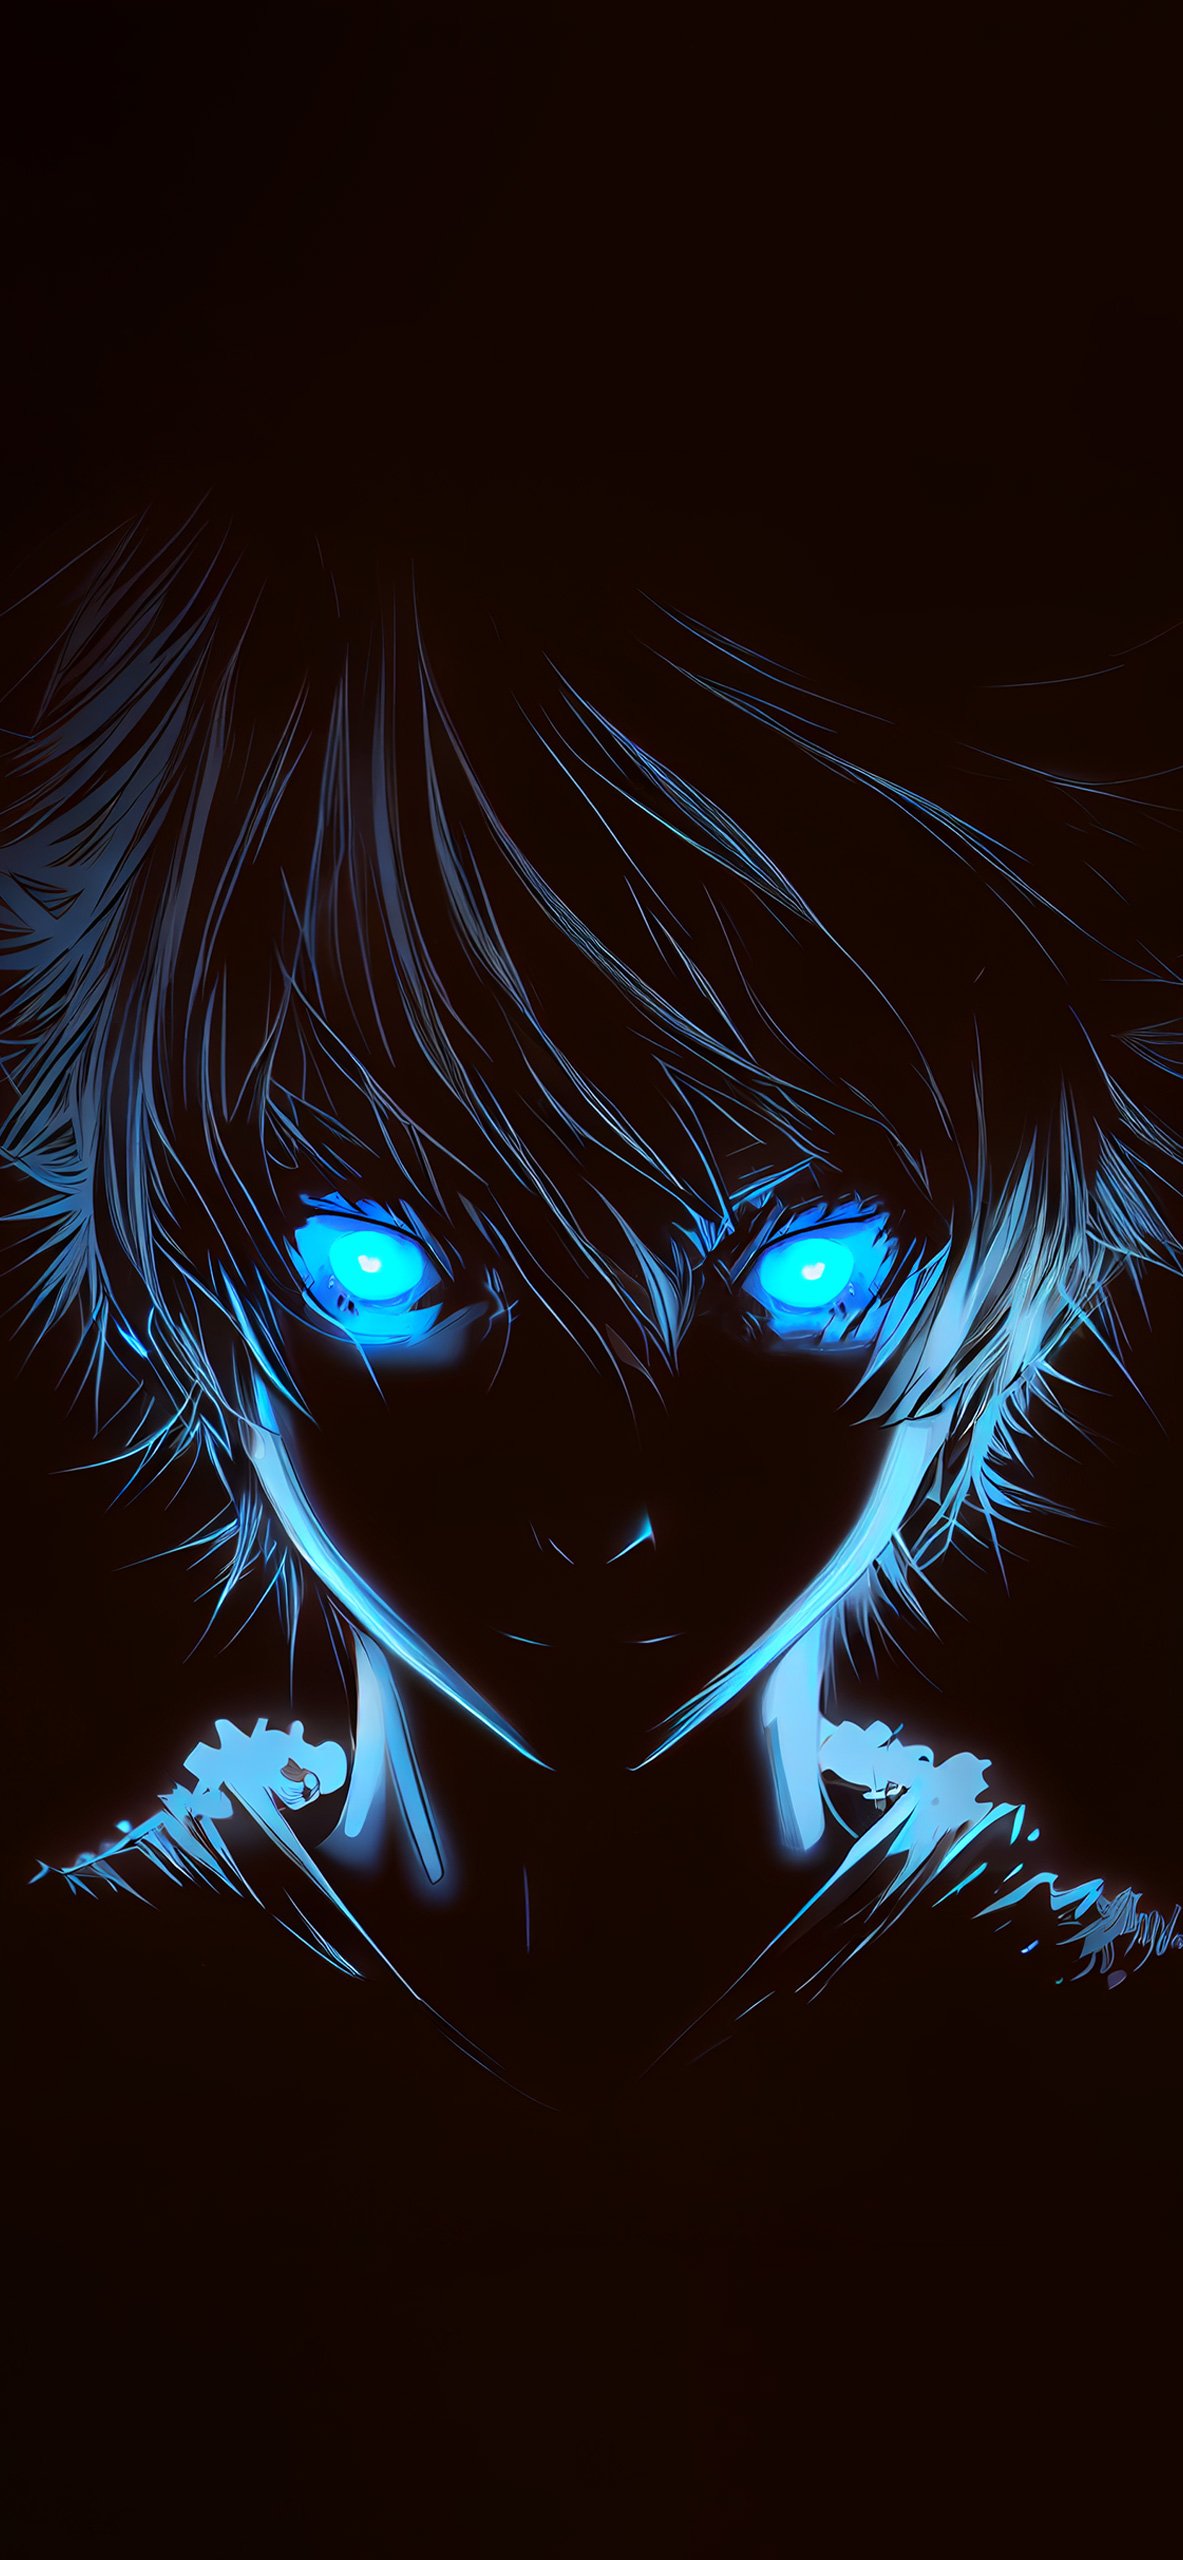 Boy with Blue Glowing Eyes Anime Wallpaper Wallpaper 4k